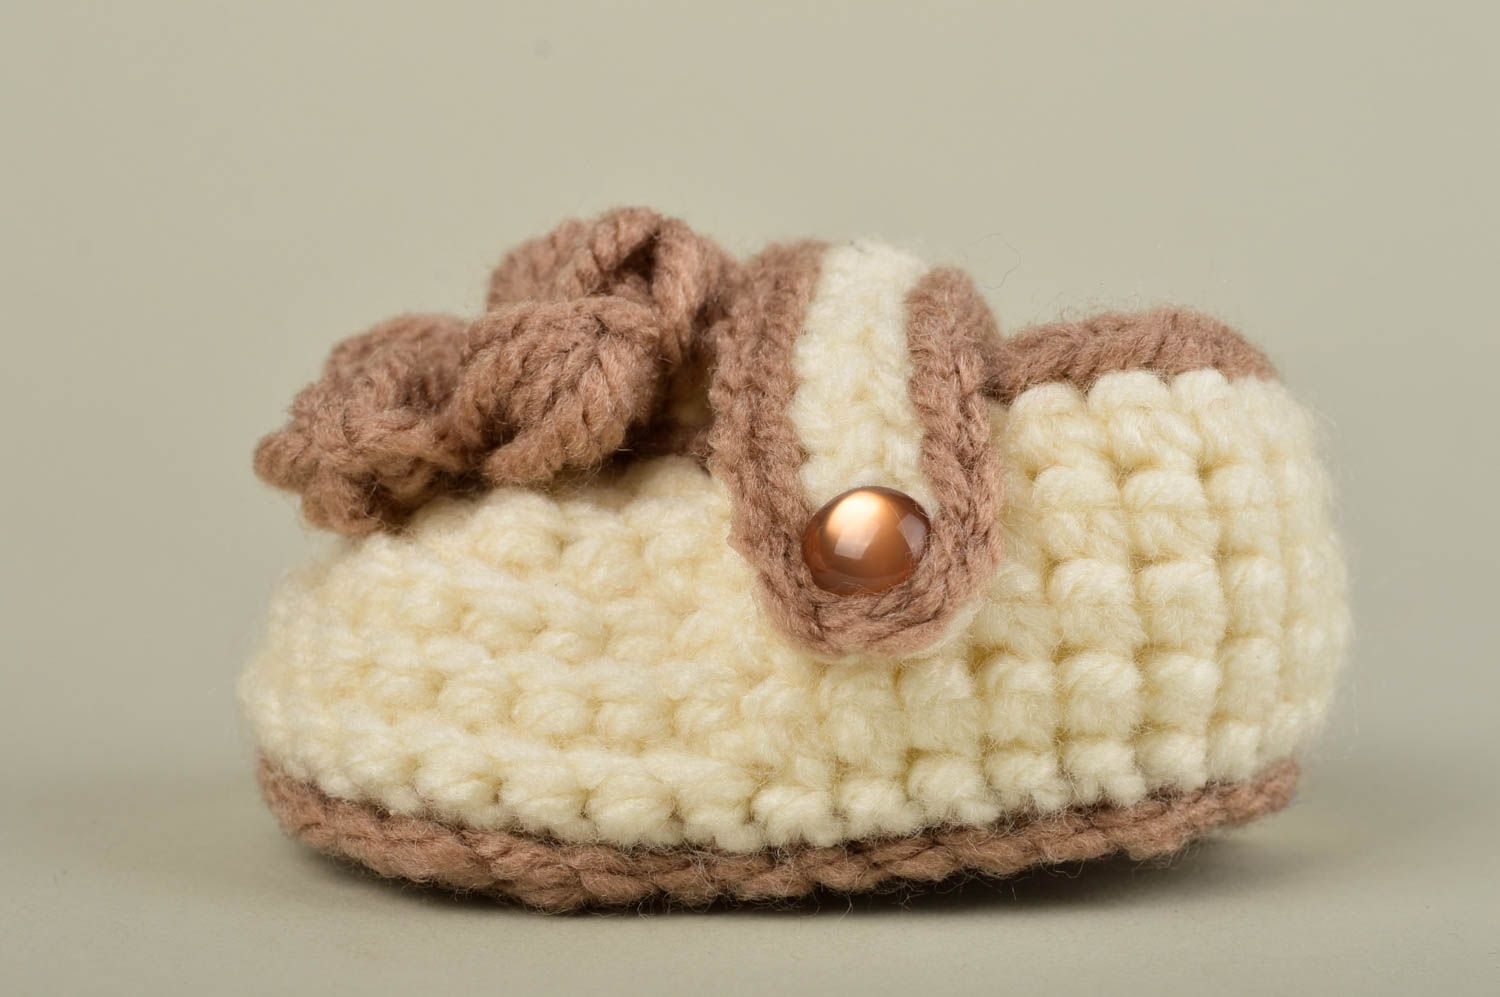 Hand-crocheted baby booties for newborn children handmade socks for babies photo 3